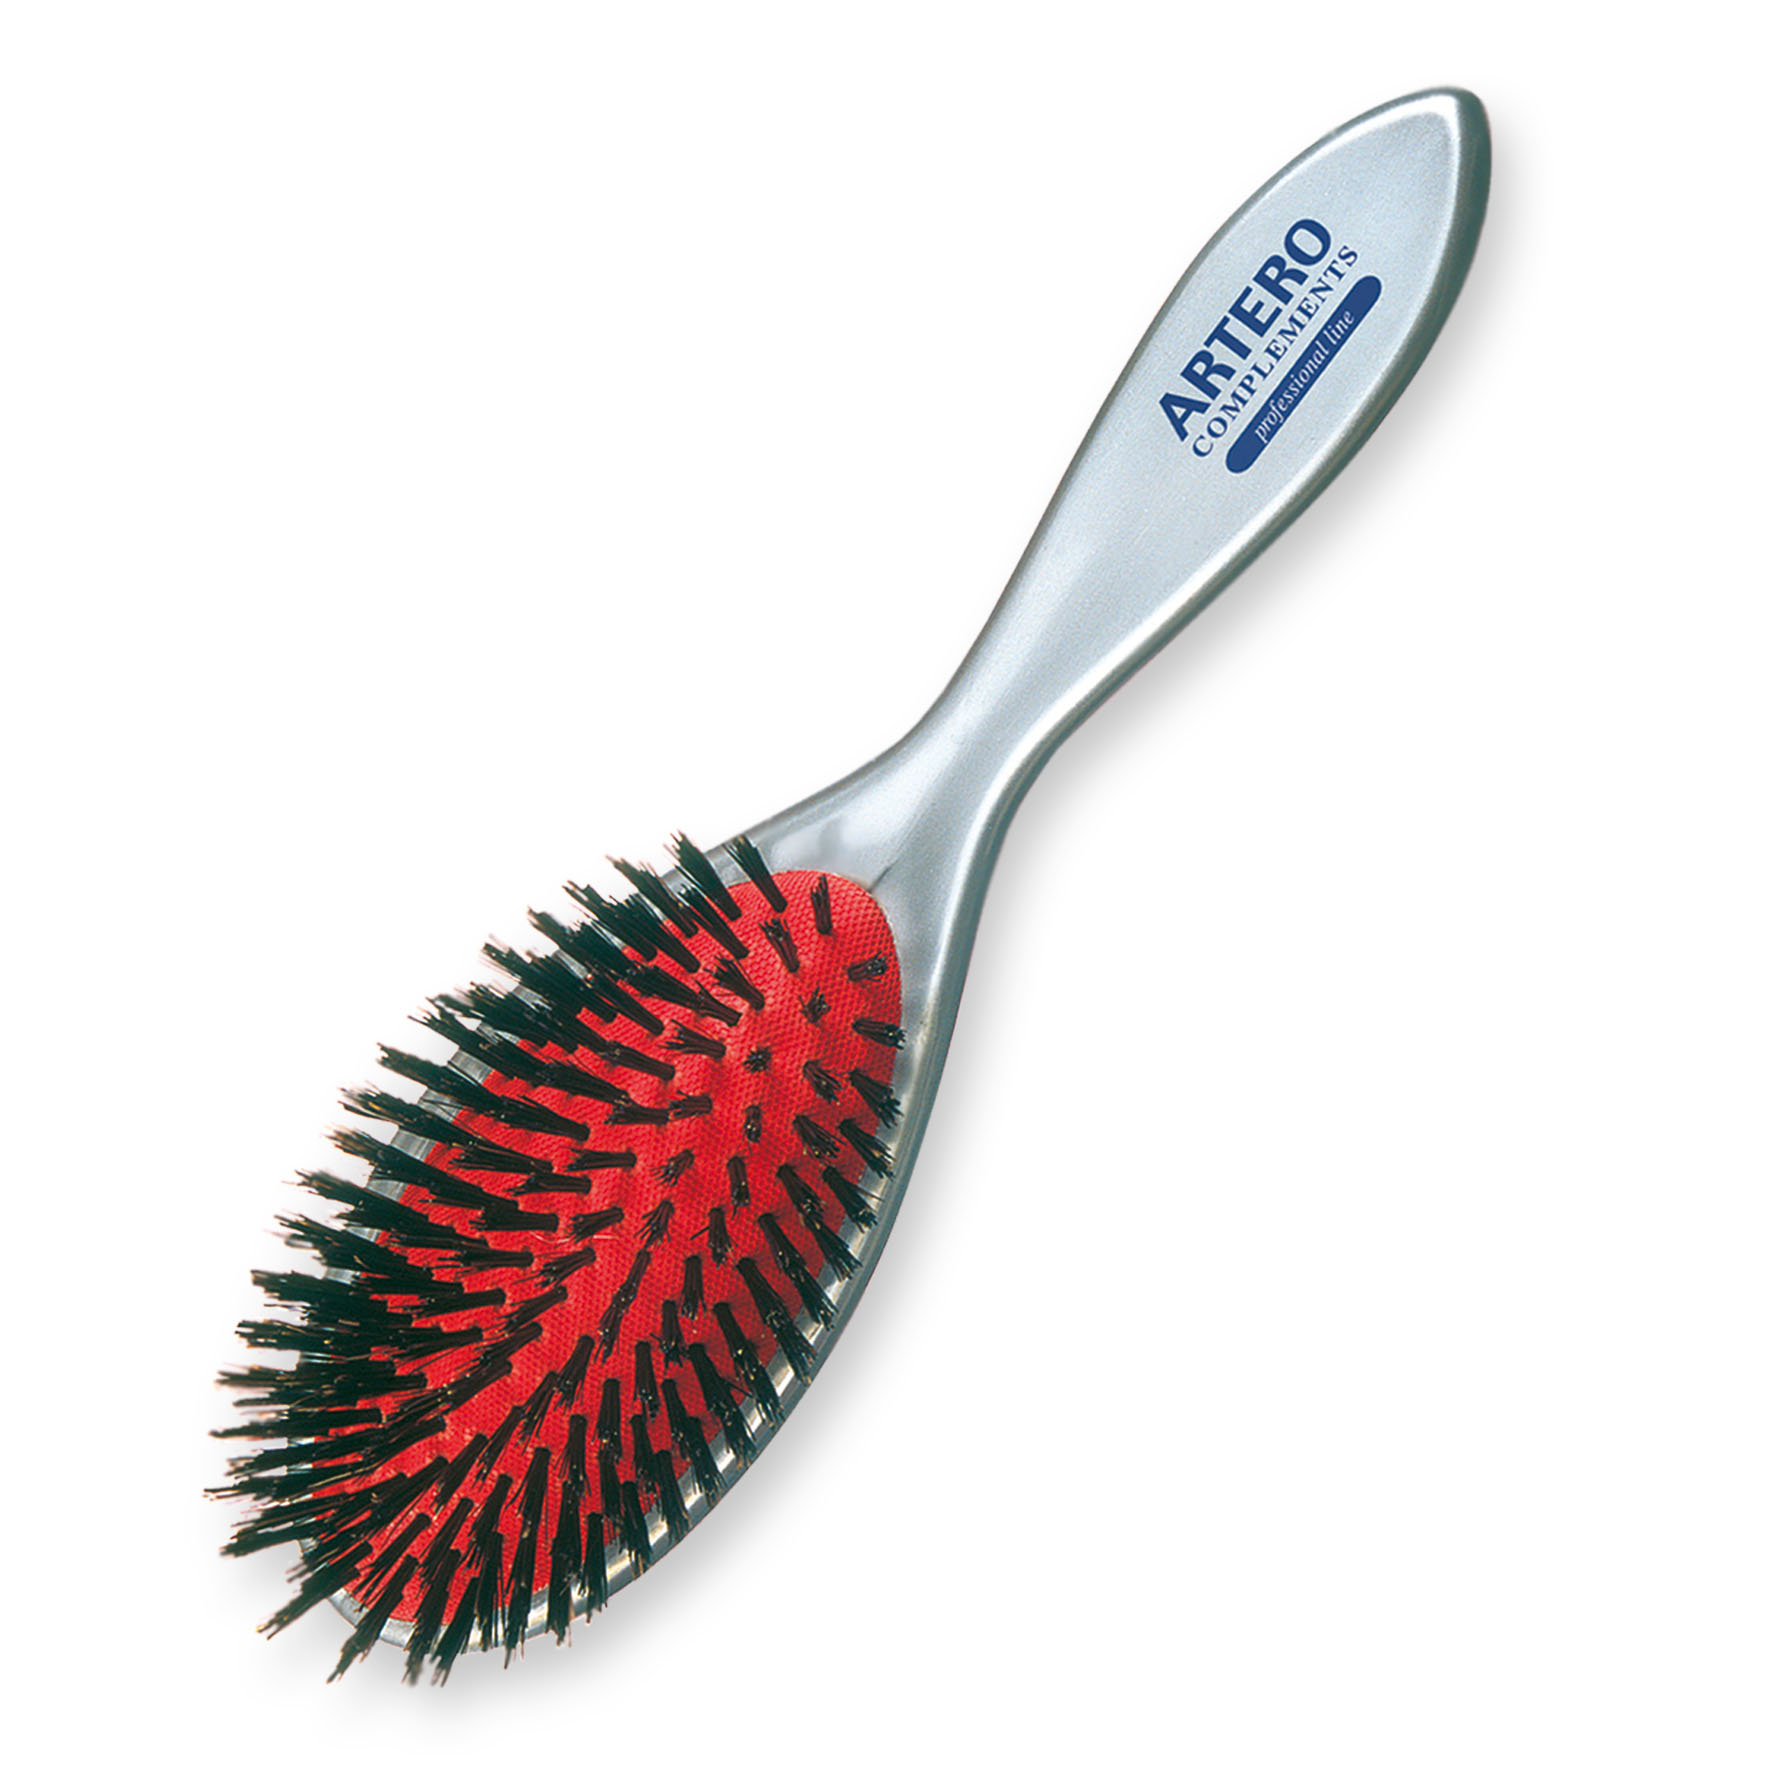 ARTERO Bristle Hair Brush